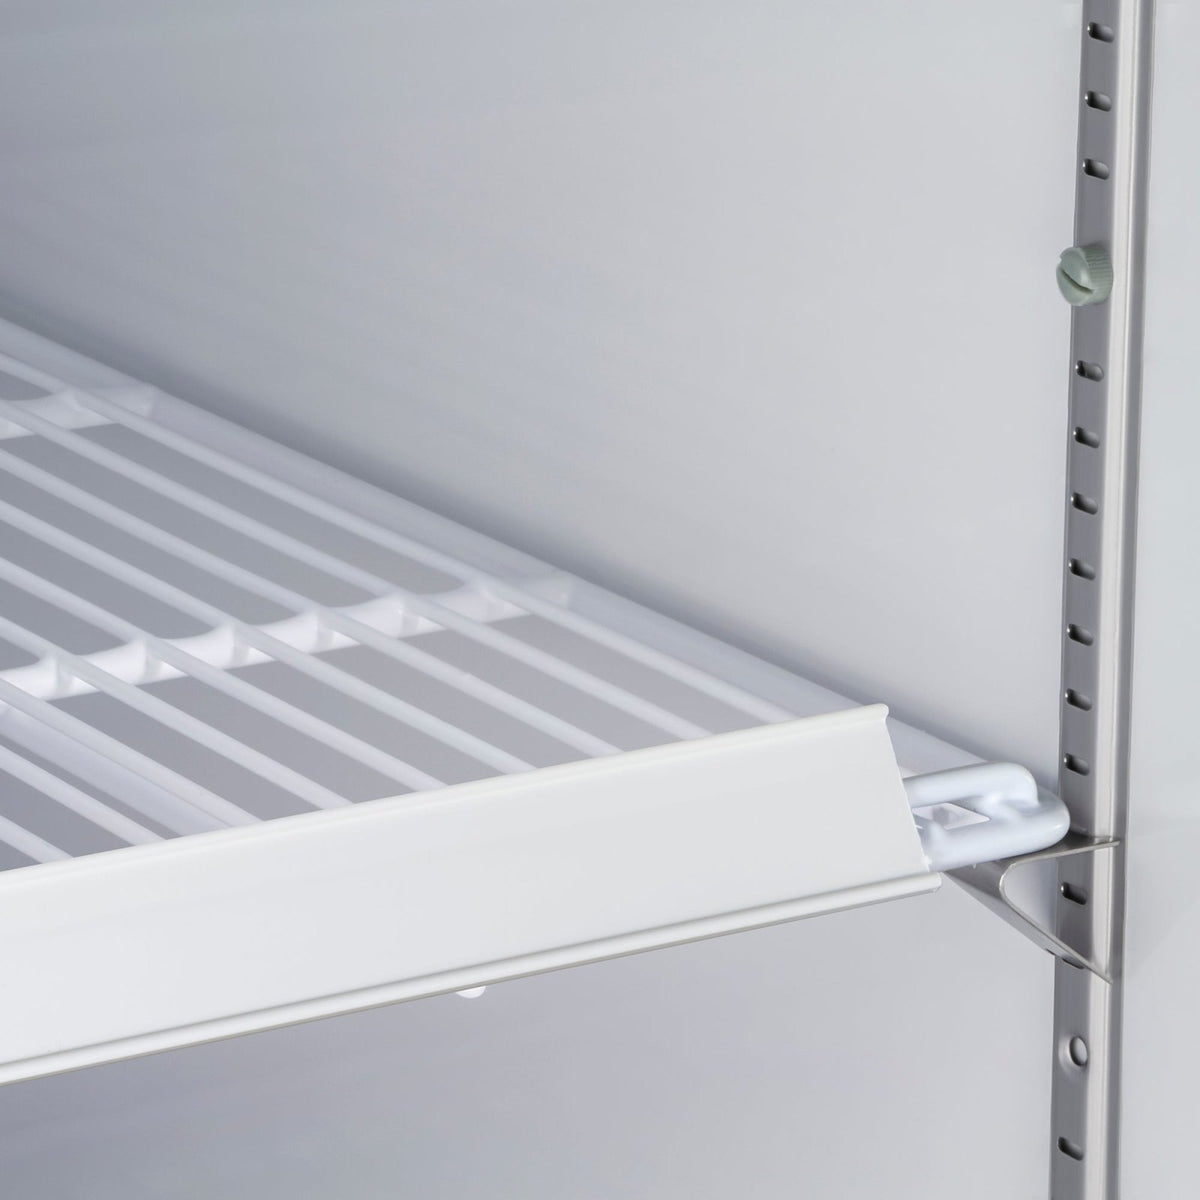 Maxx Cold MXM1 - 16RBHC X - Series Single Glass Door Merchandiser Refrigerator, Free Standing, 25"W, 16 cu. ft. Storage Capacity, in Black - TheChefStore.Com